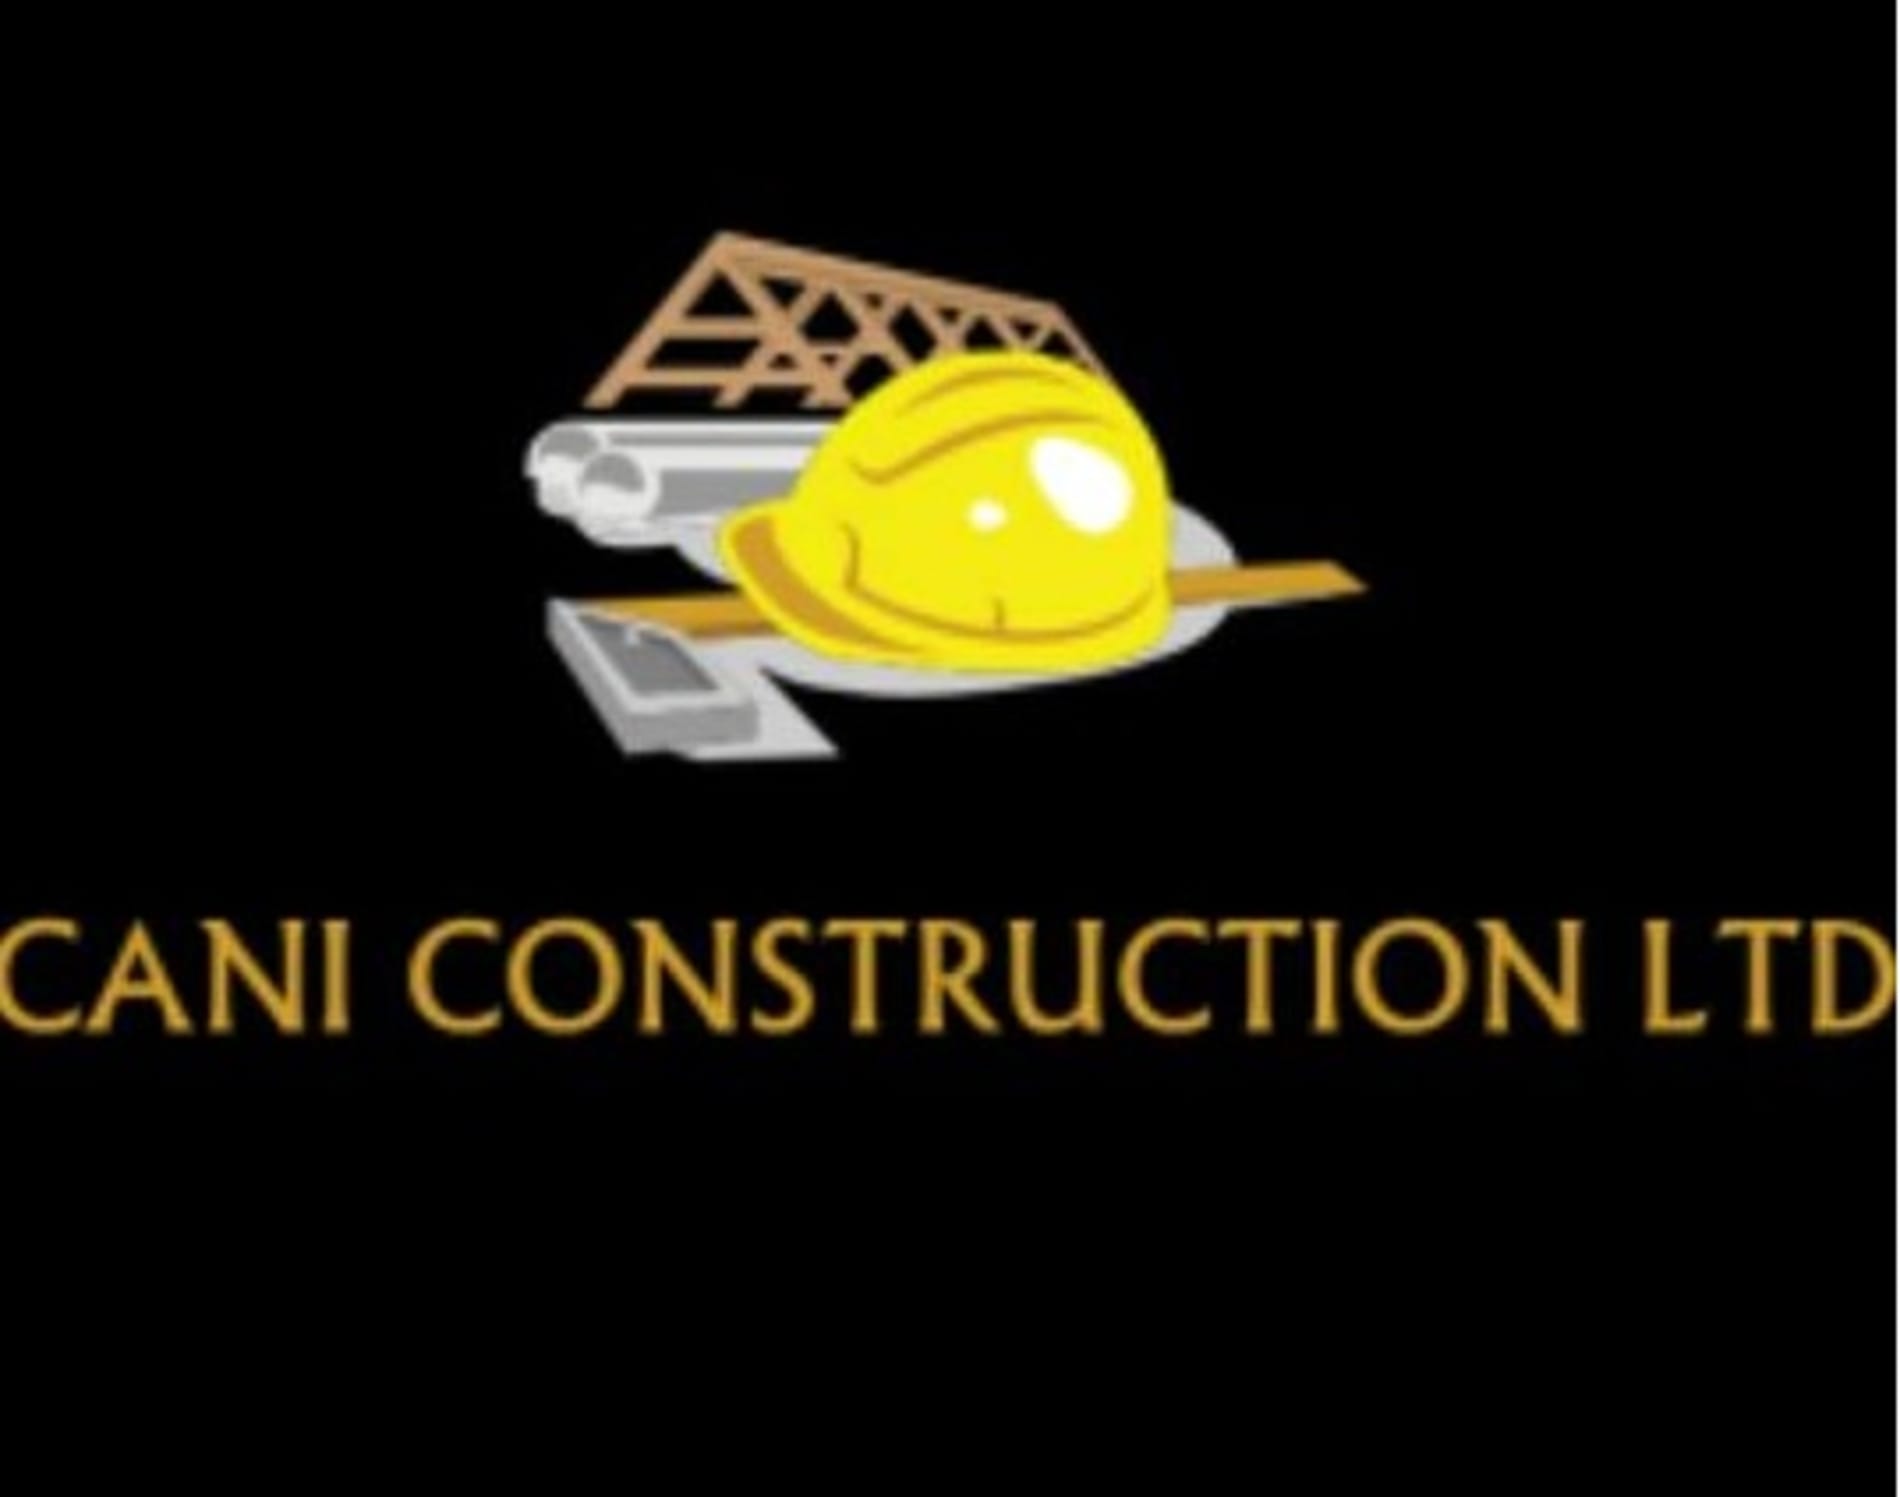 Cani Construction Ltd